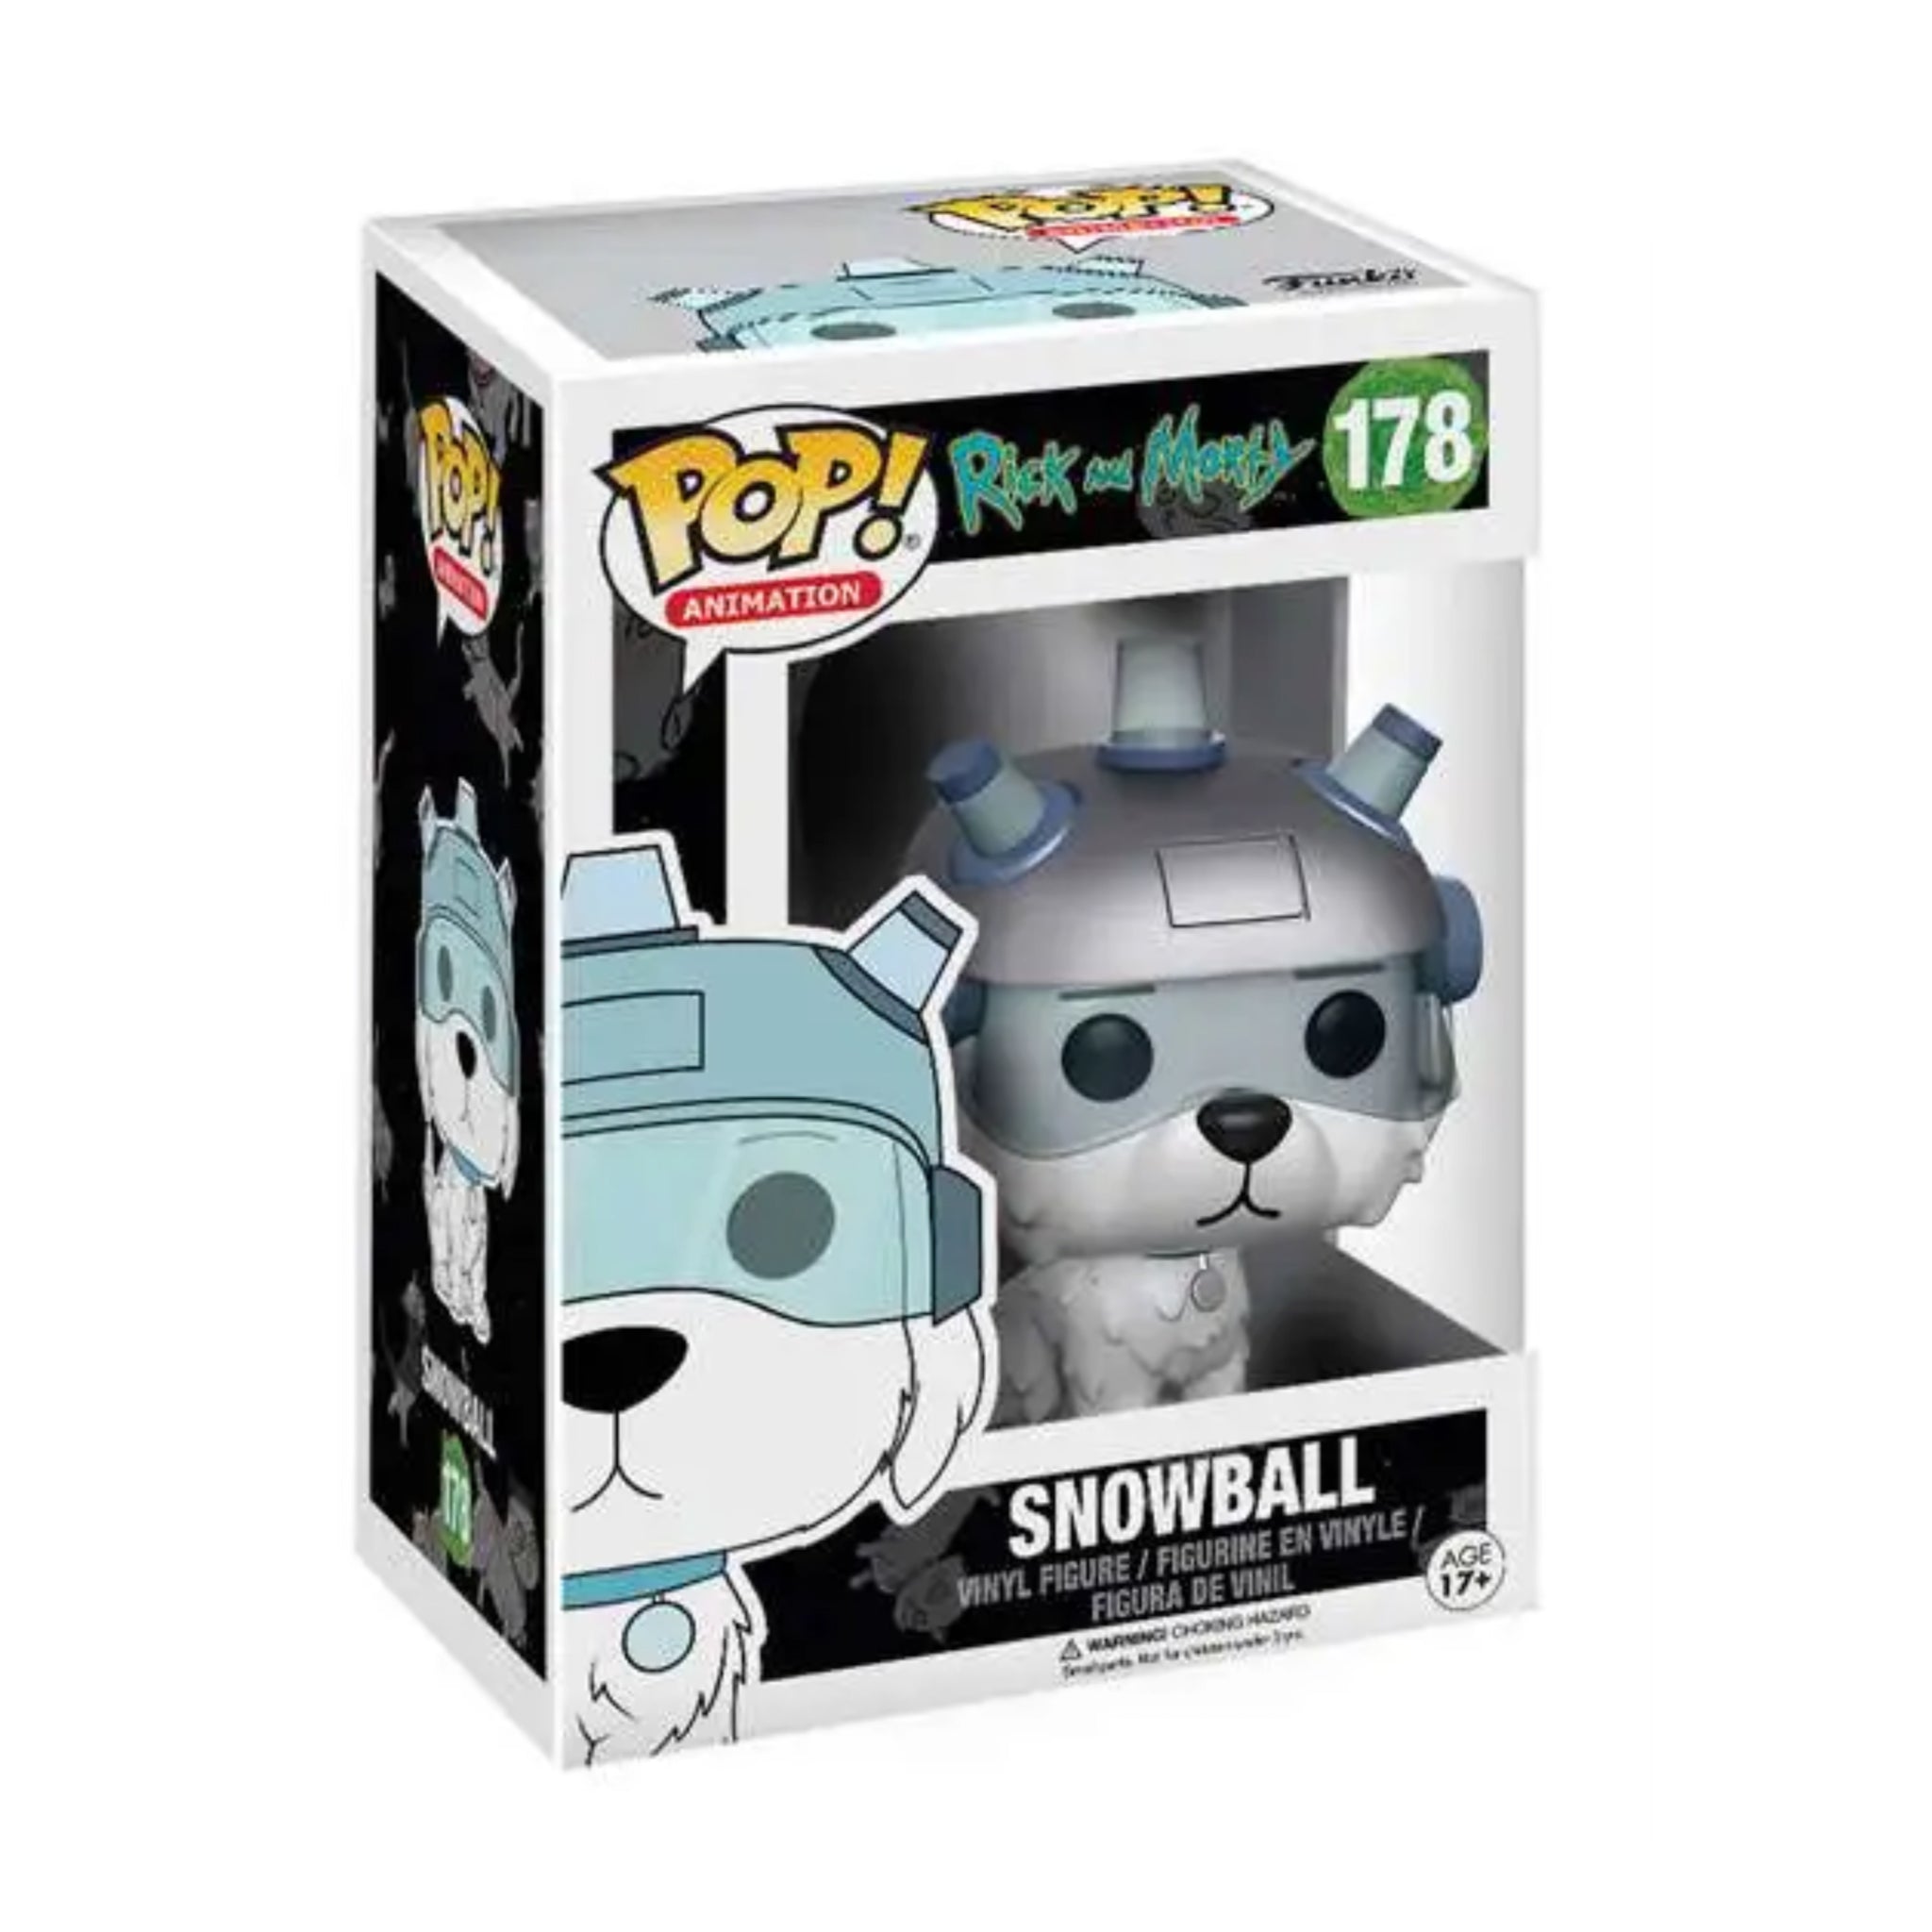 Snowball Funko Pop!